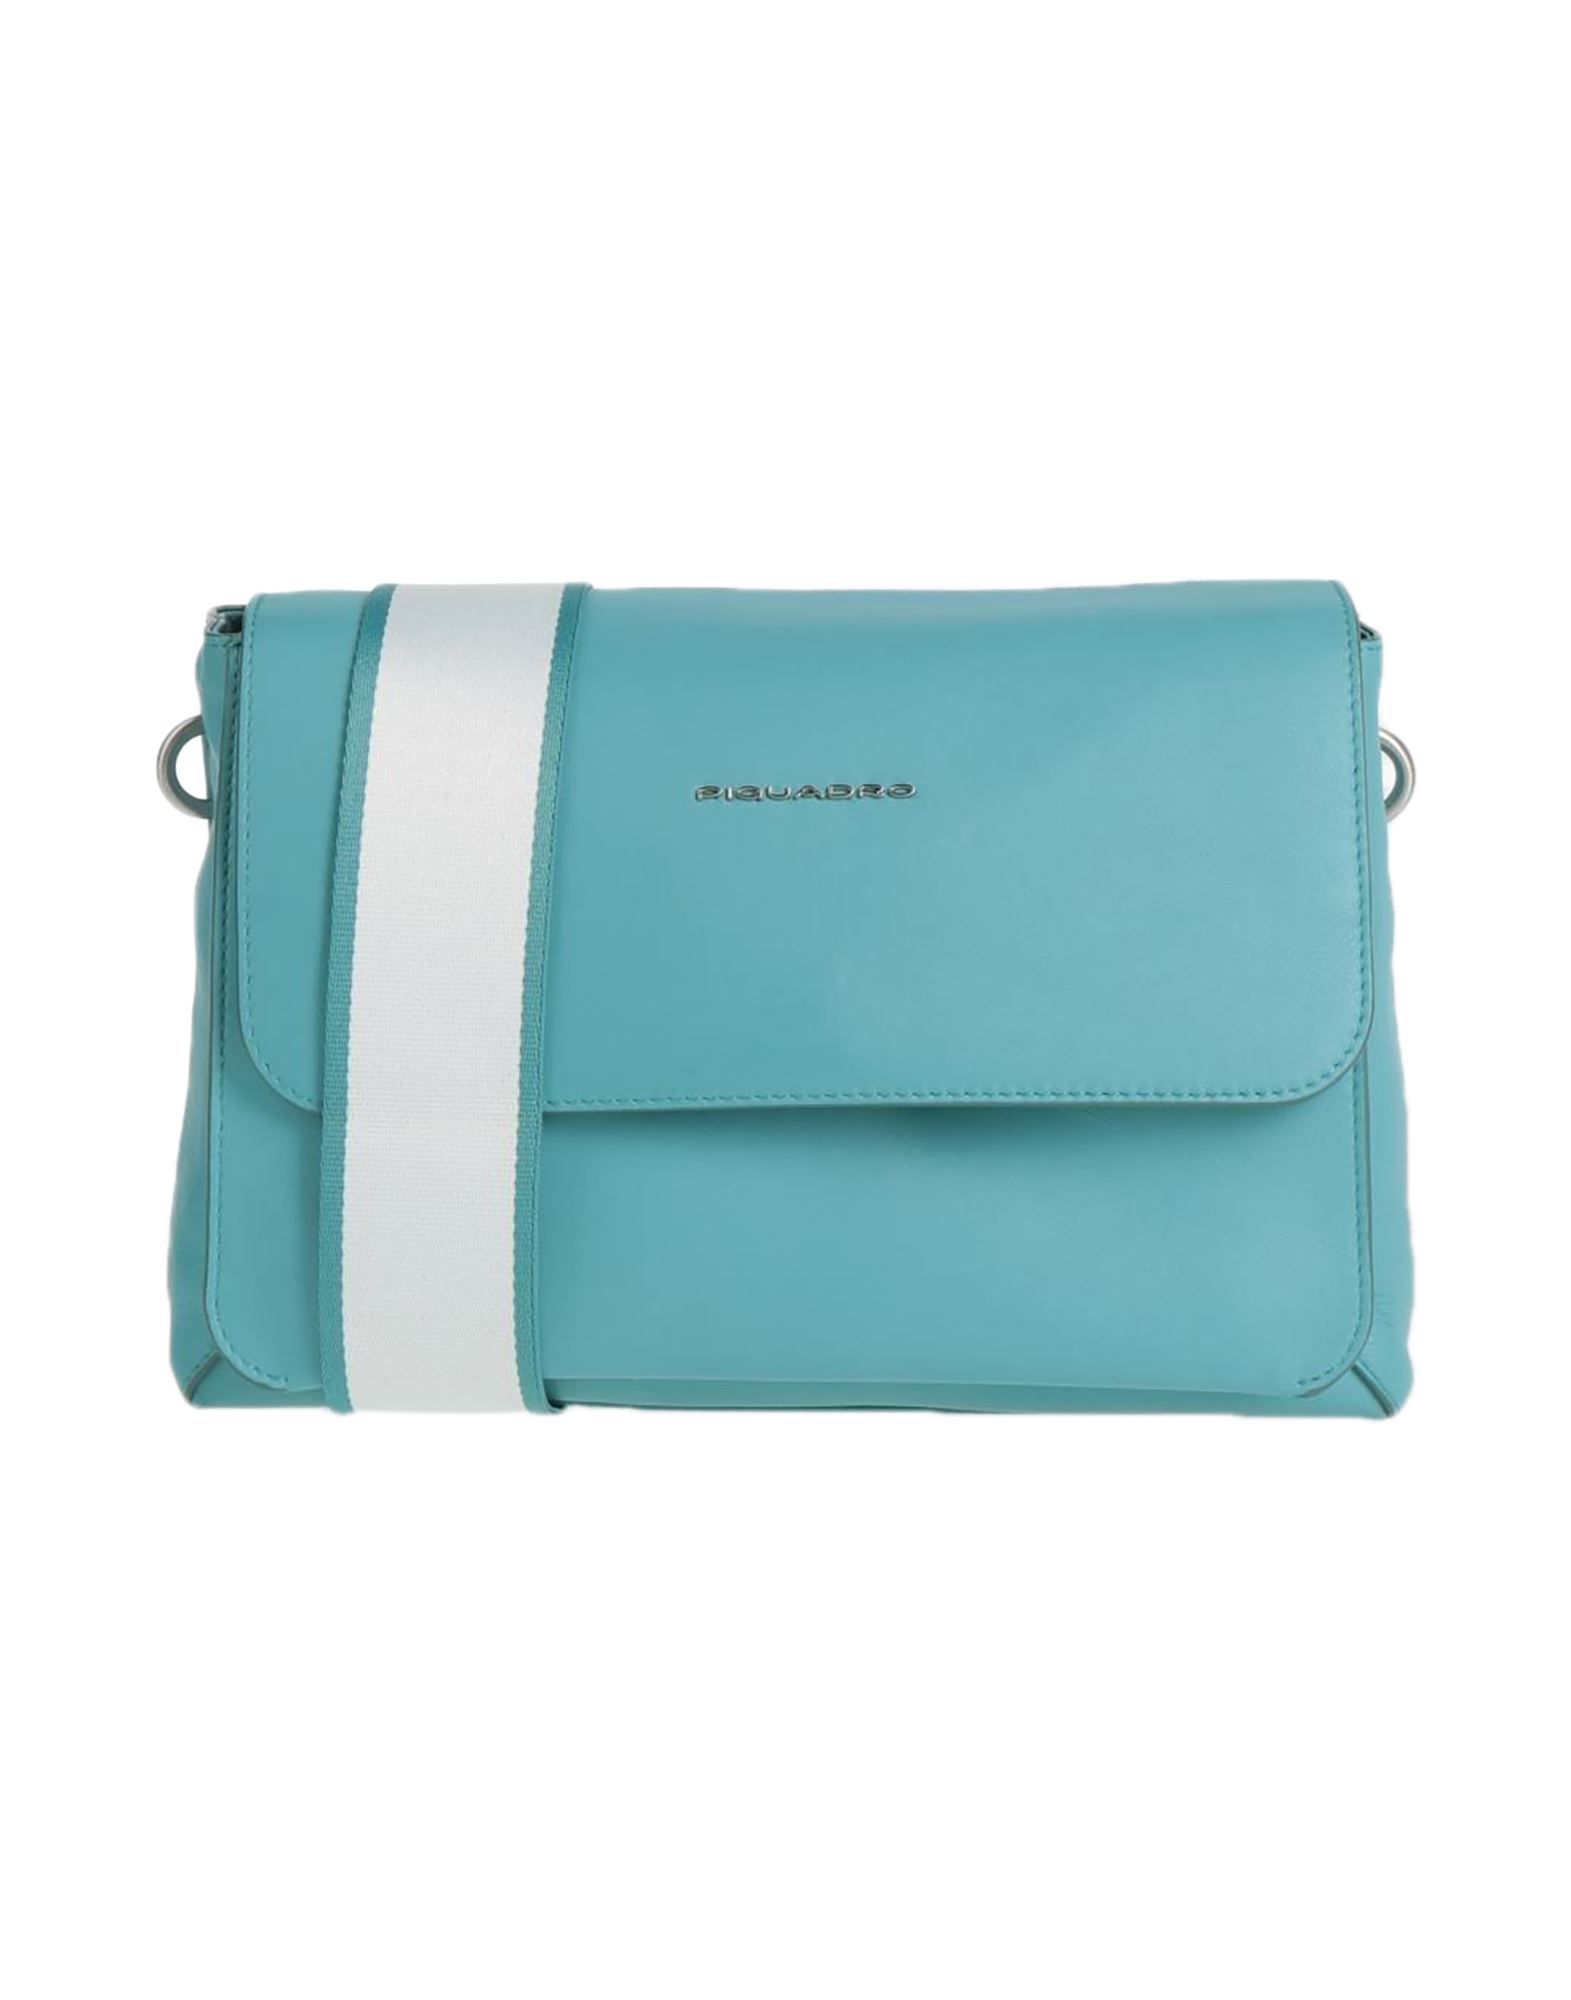 Piquadro Handbags In Turquoise